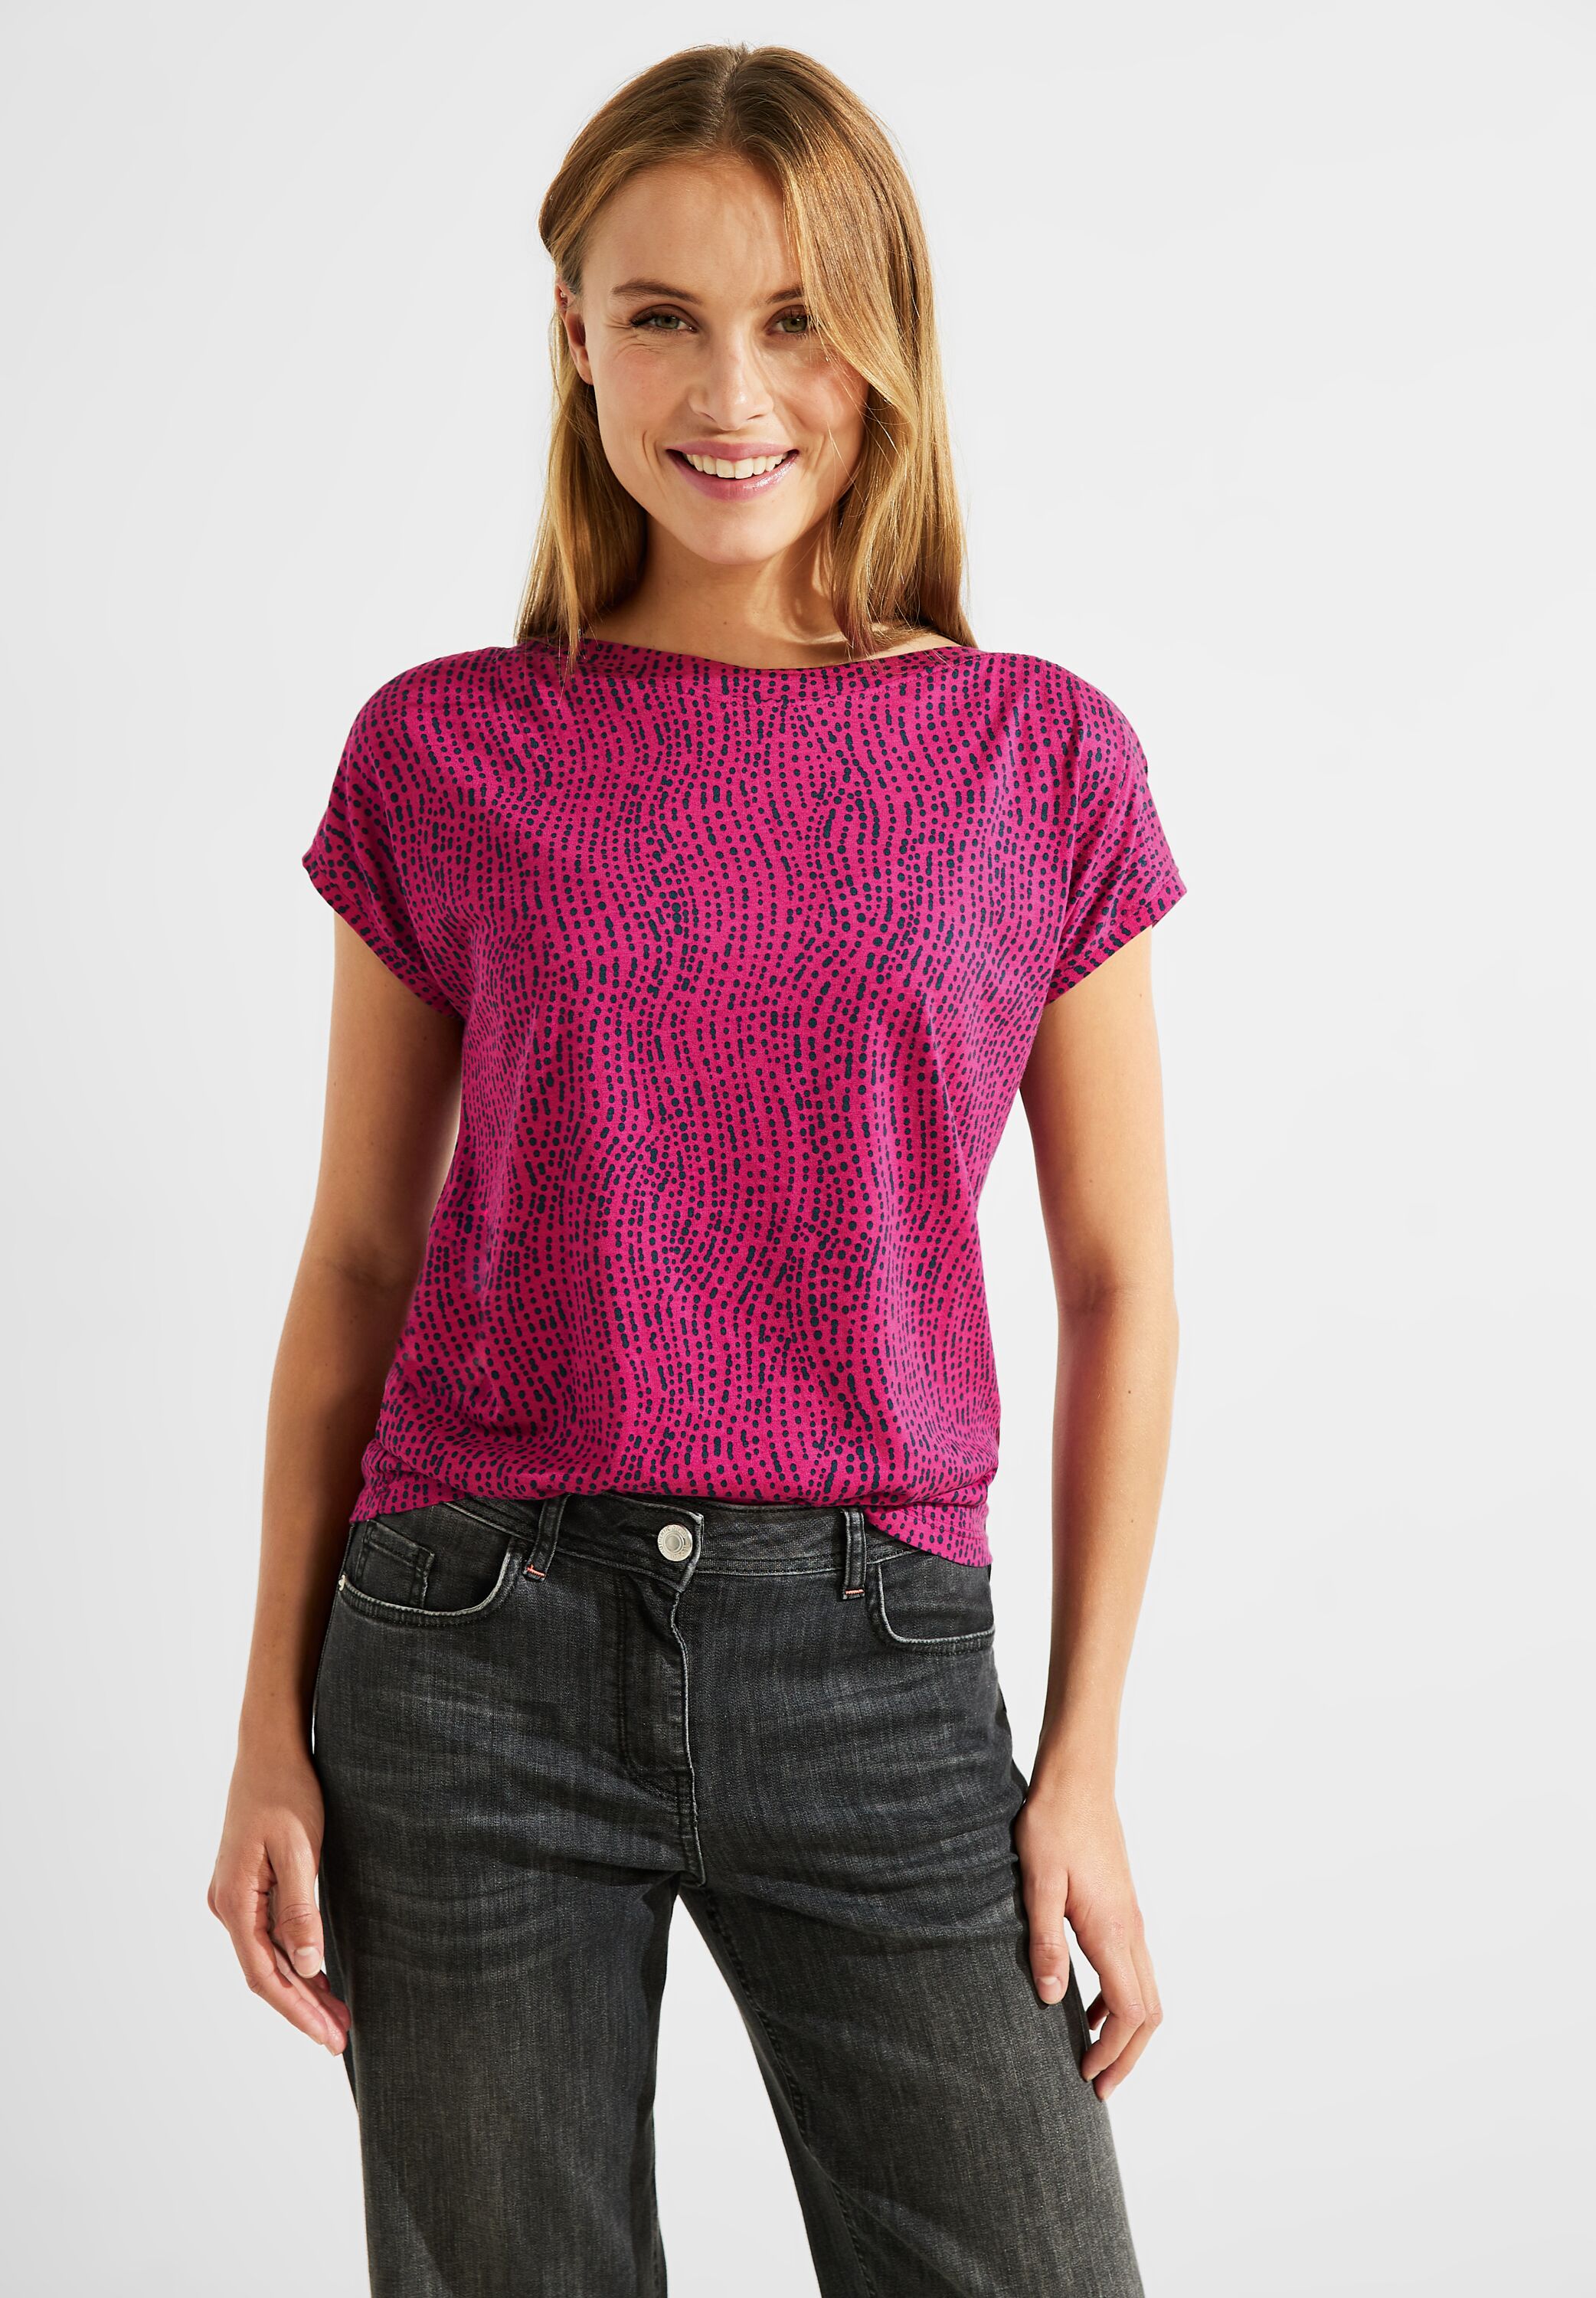 Cool CONCEPT T-Shirt SALE in B320331-25095 Mode reduziert Pink CECIL - im